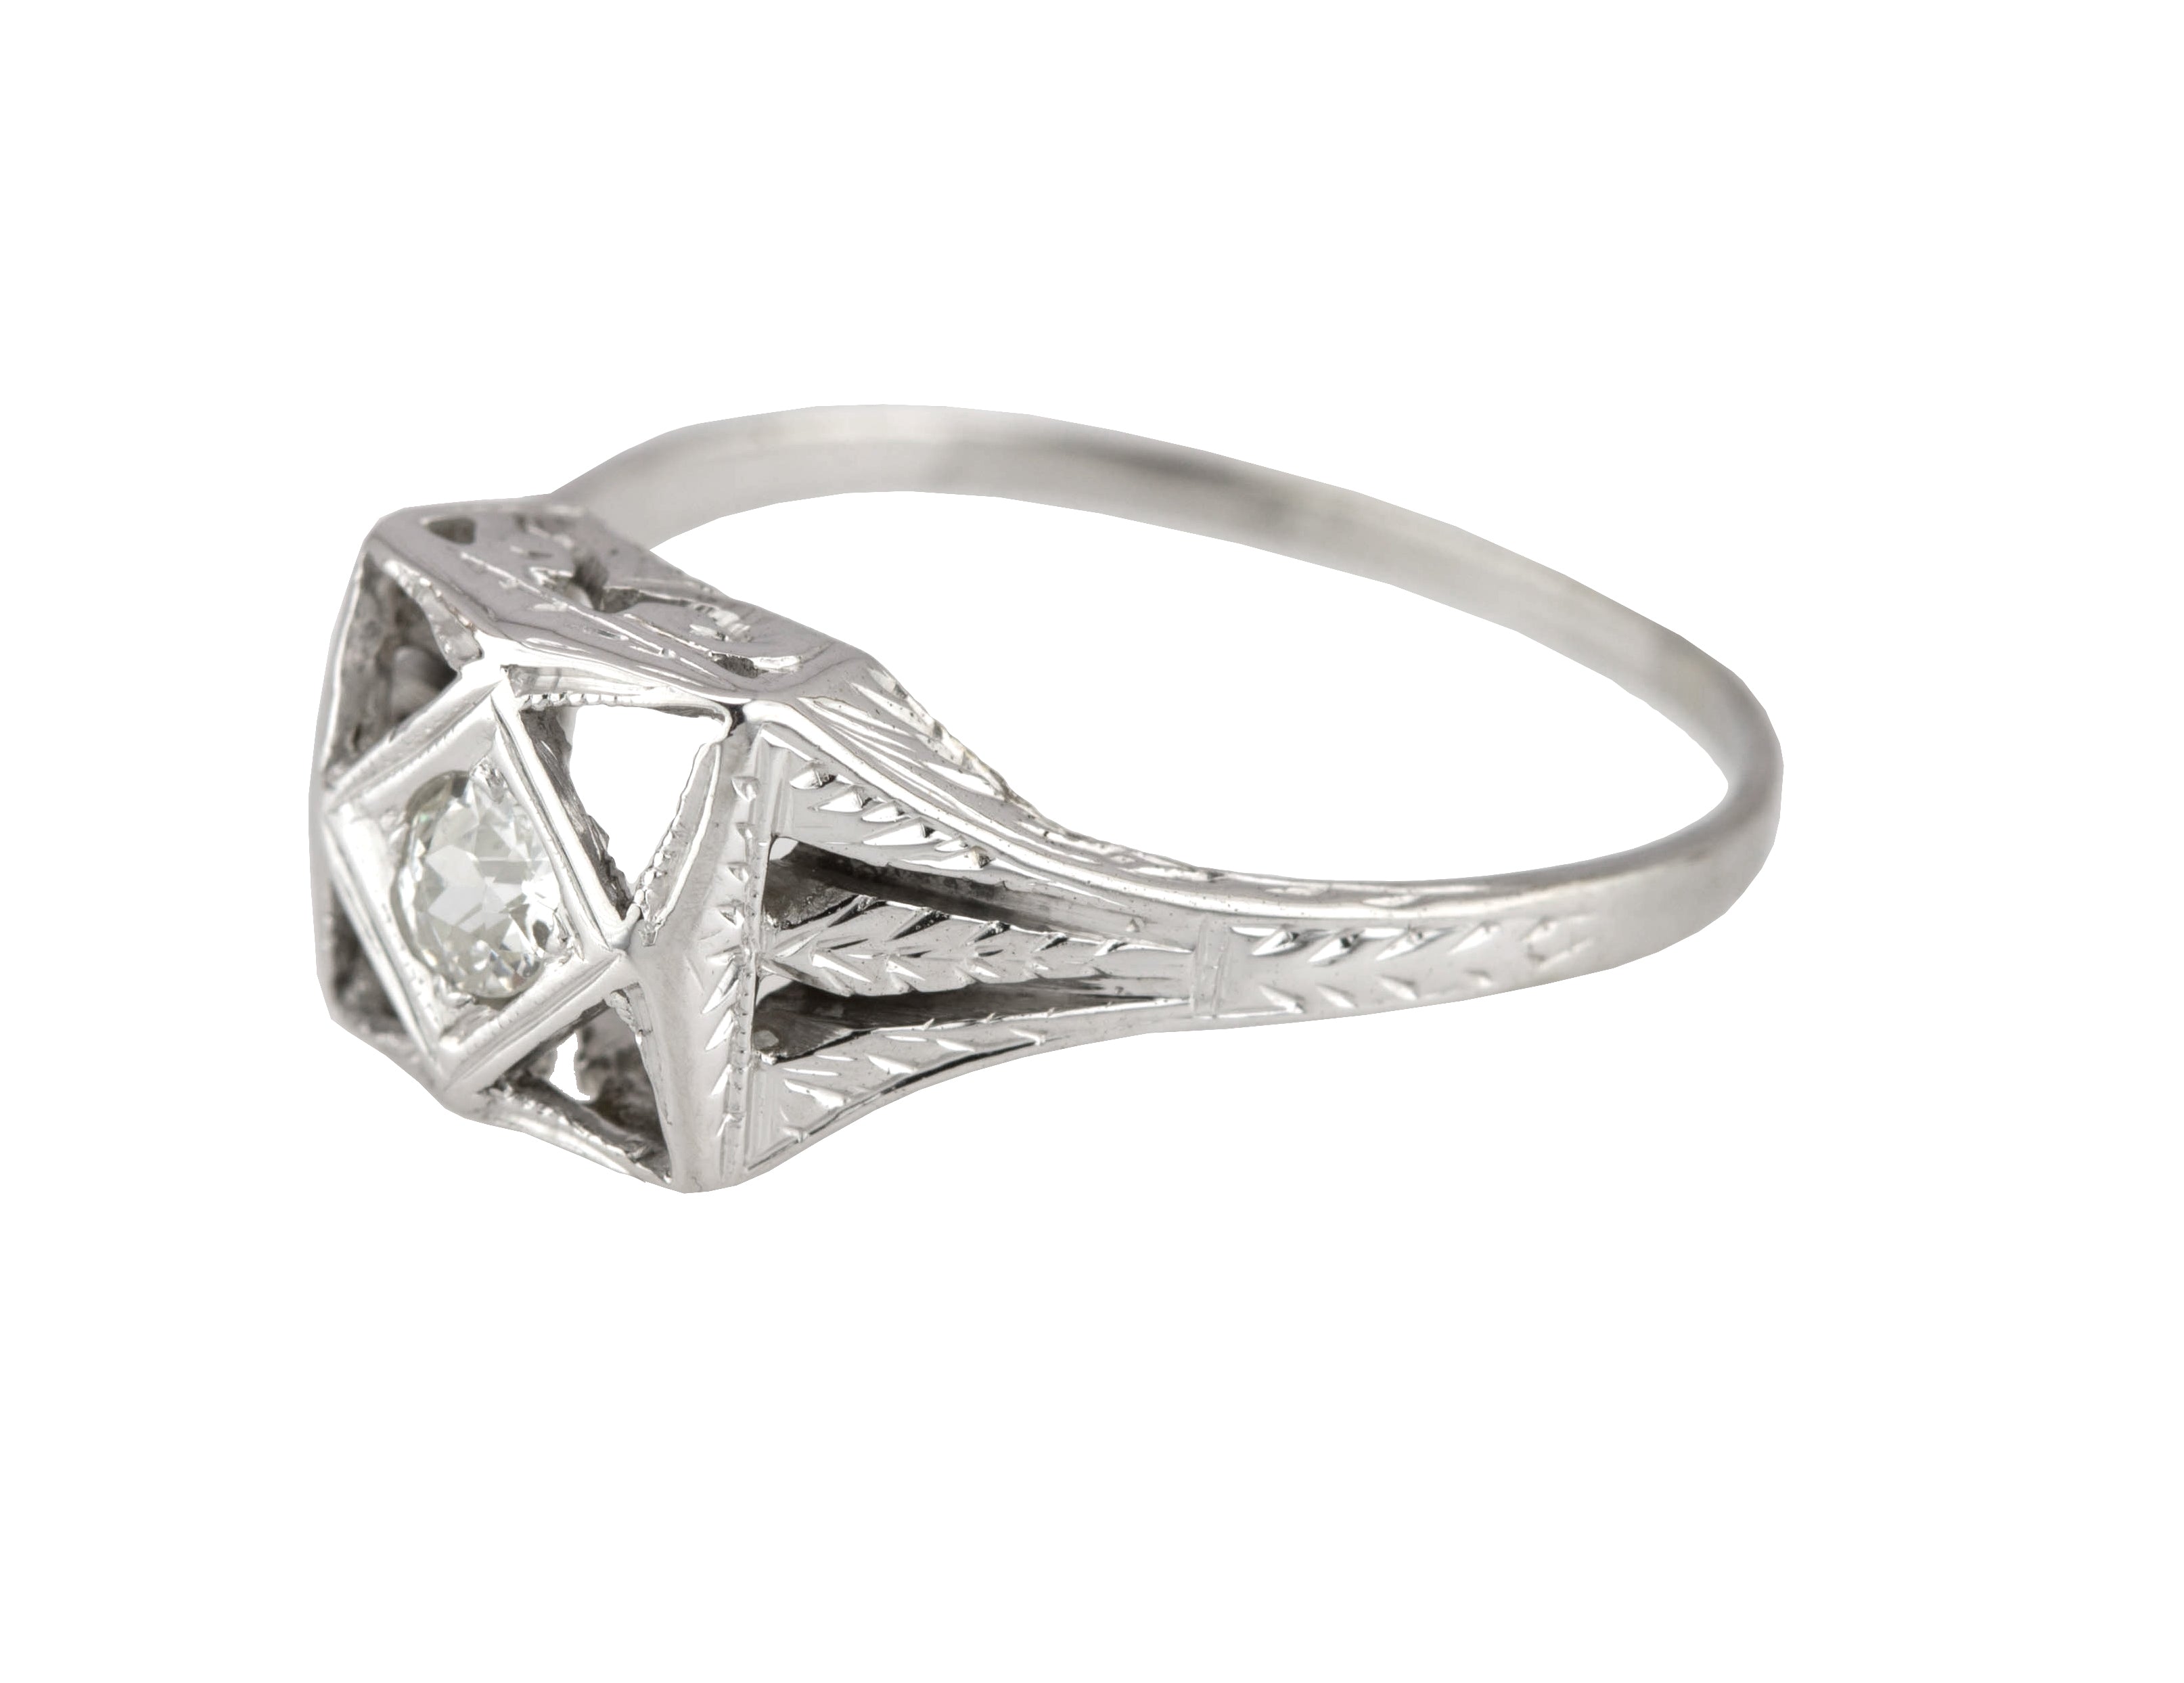 Ladies Antique Art Deco 18K White Gold 0.10 CT Solitaire Diamond Engagement Ring